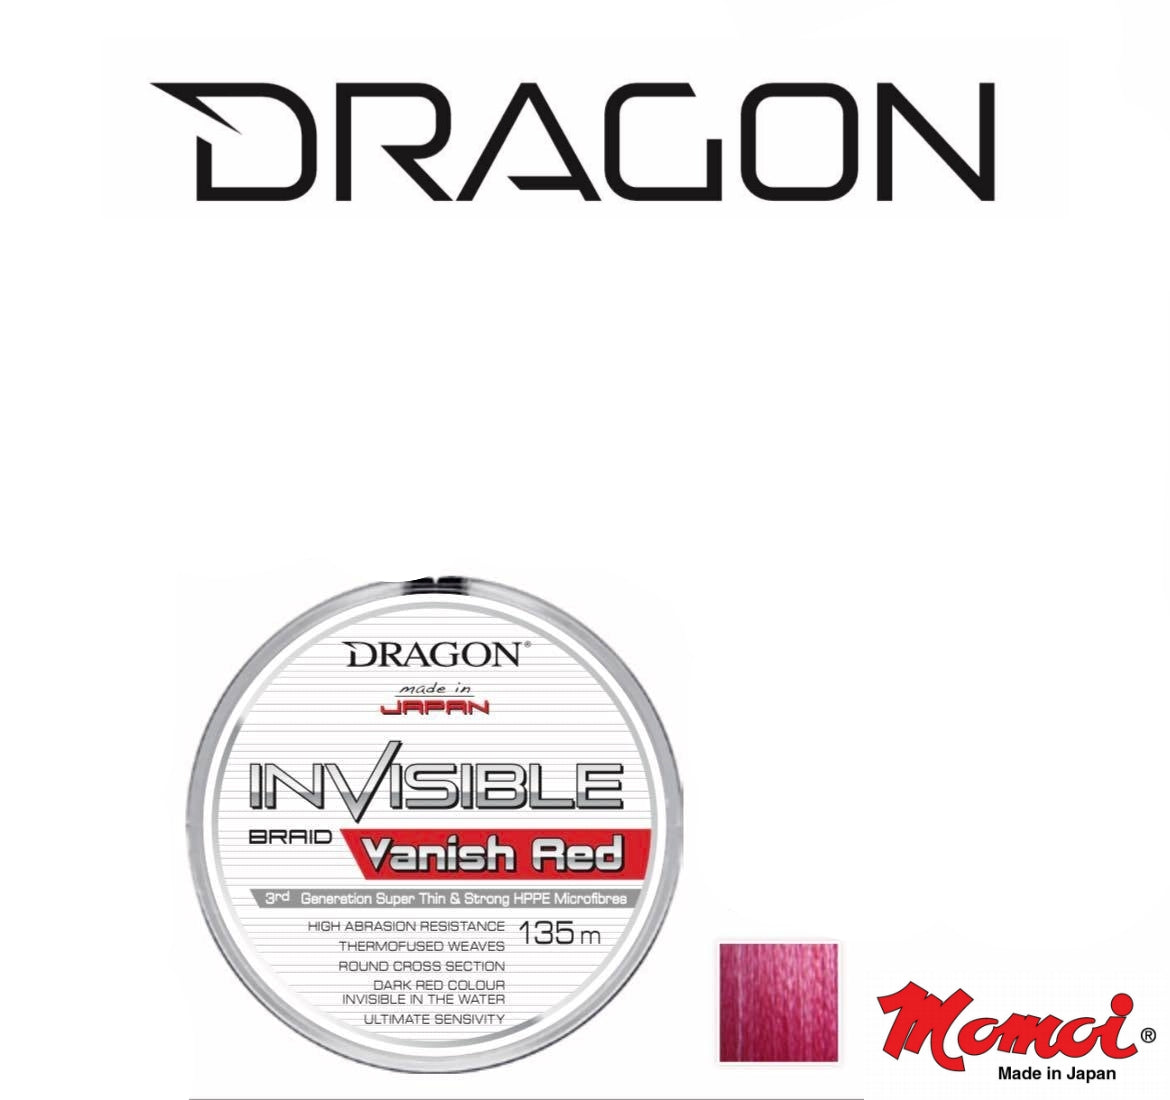 Dragon Invisible braid. Vanish Red 135m fishing line. – Predator